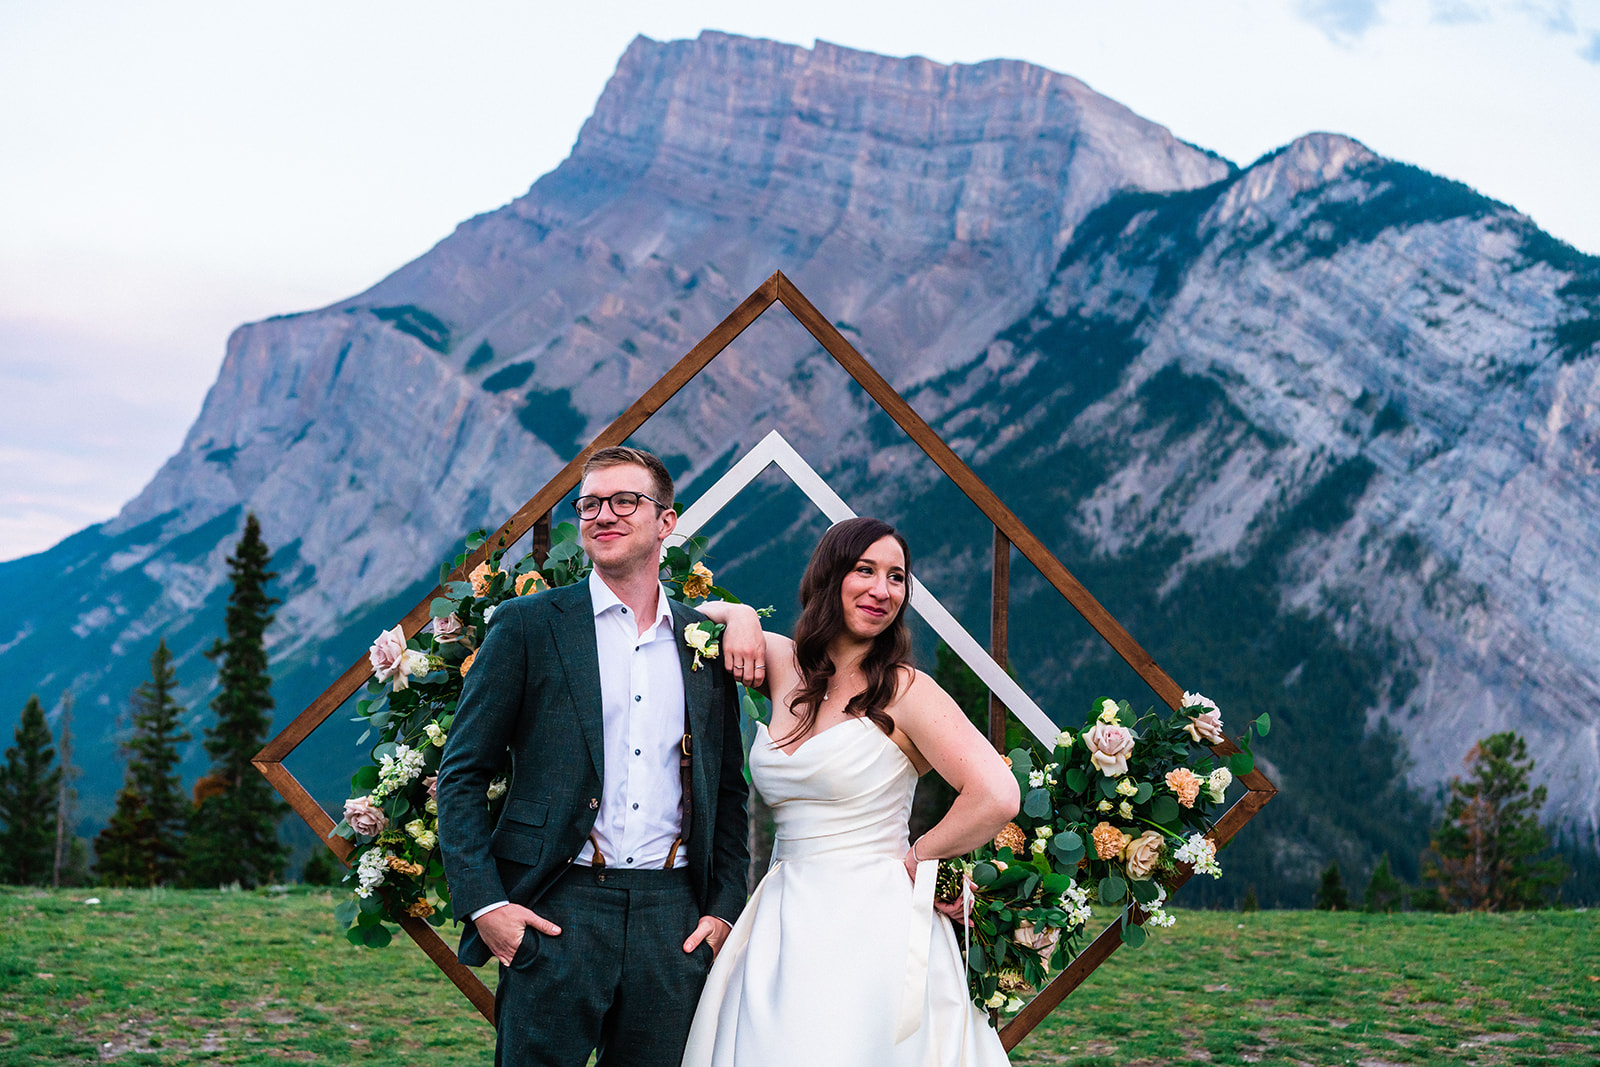 Intimate Banff Wedding and Elopement in Banff, Alberta Canada